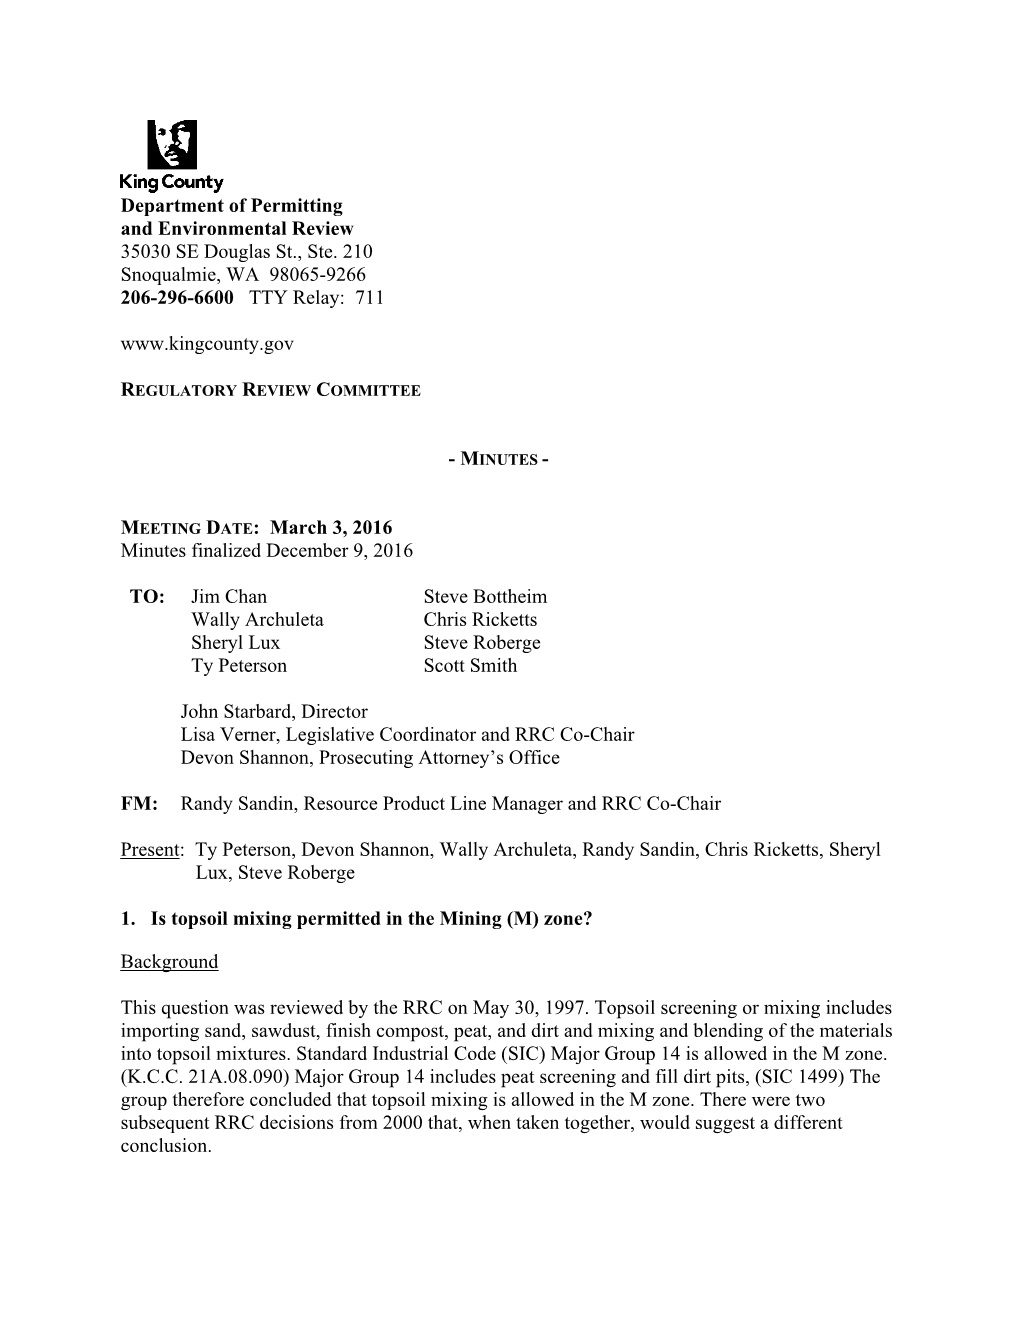 Regulatory Review Committee Meeting Minutes, 2016 03 03